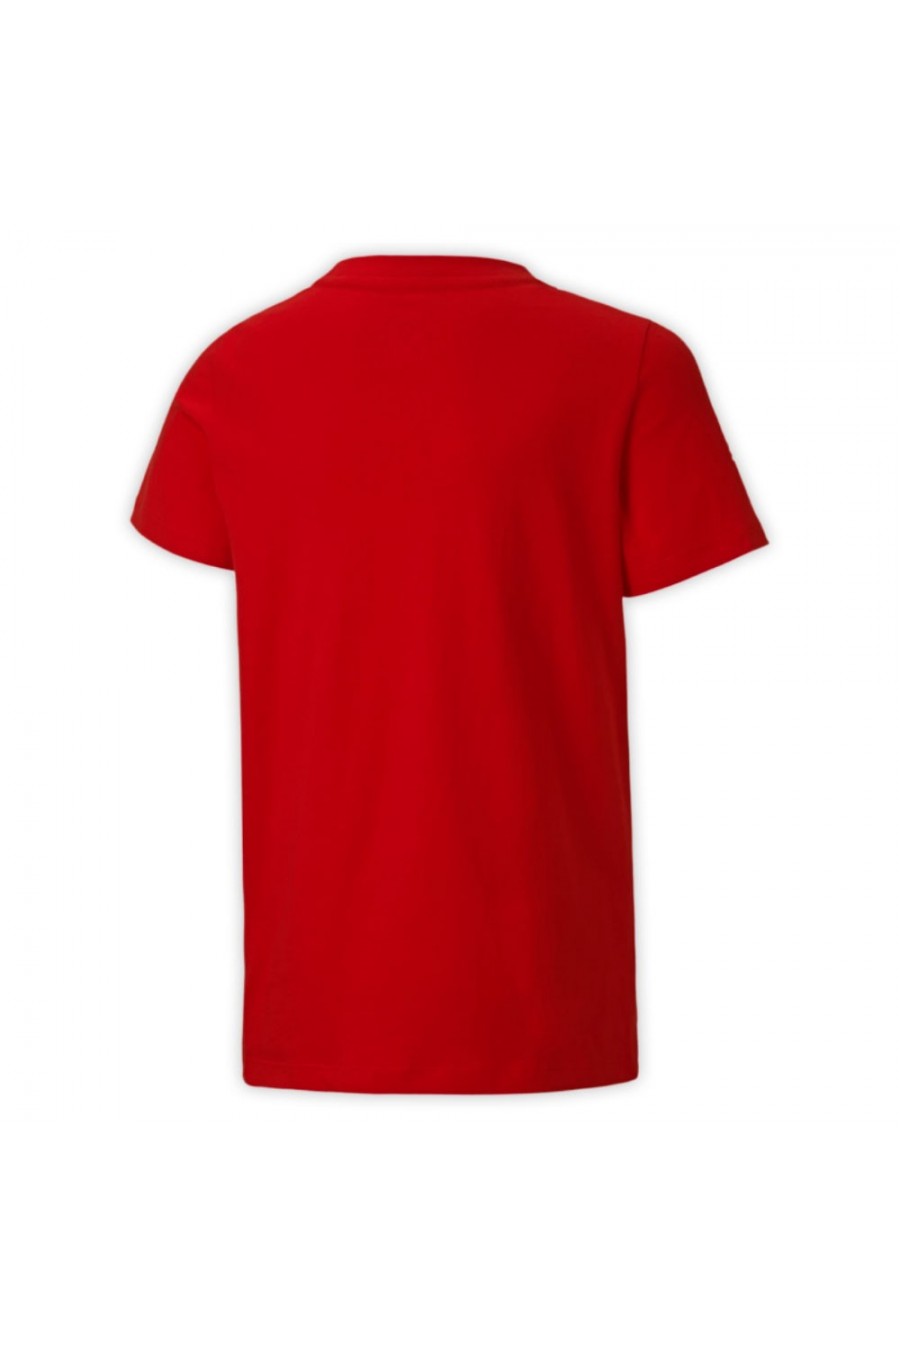 Scuderia Ferrari Race T-shirt